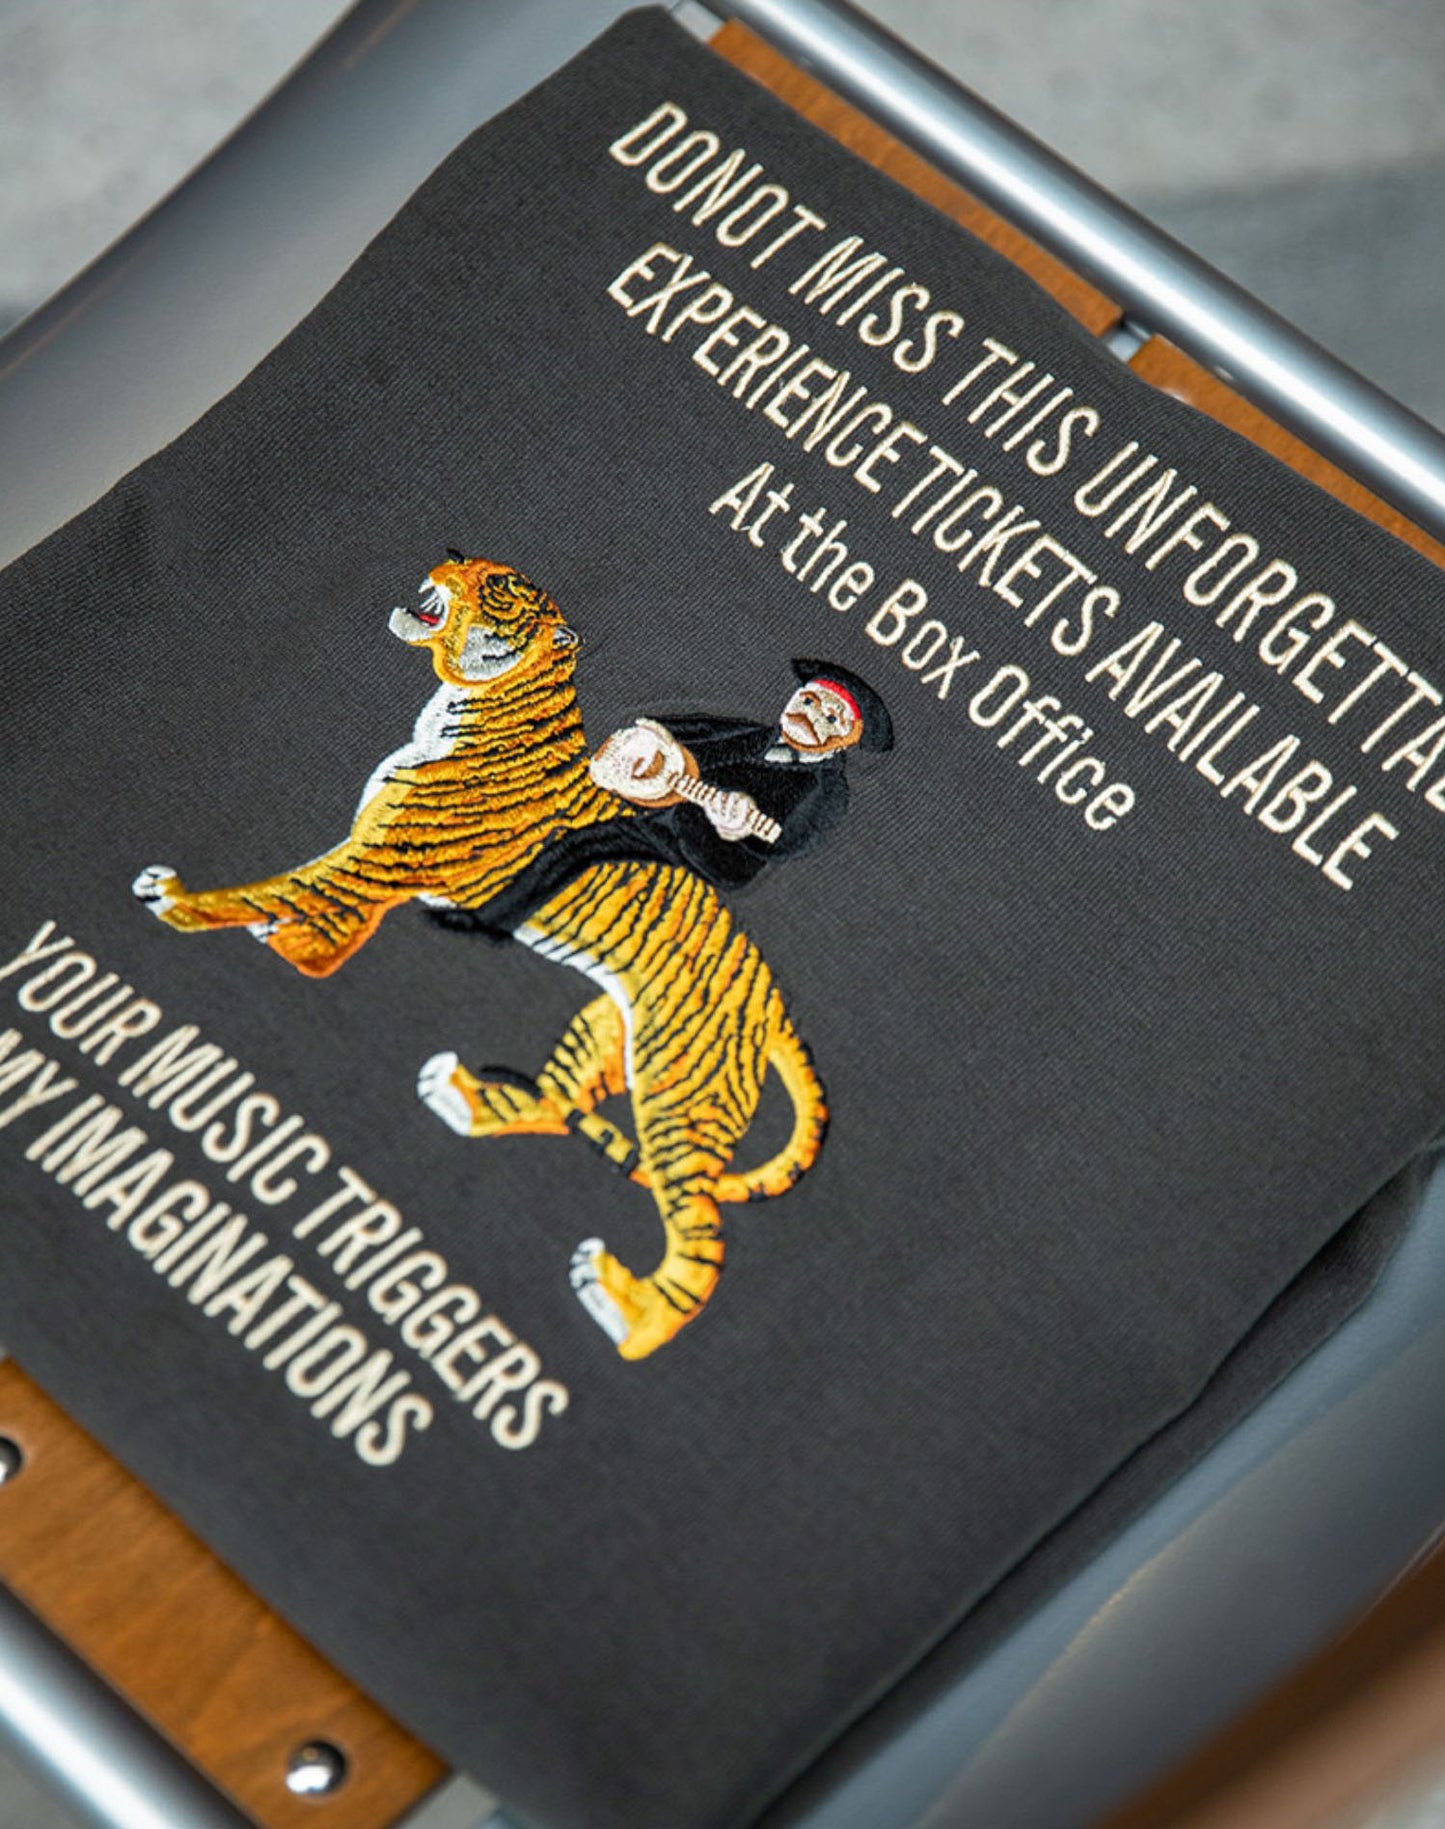 American Retro Tatami Embroidery Tiger Men's T-Shirt